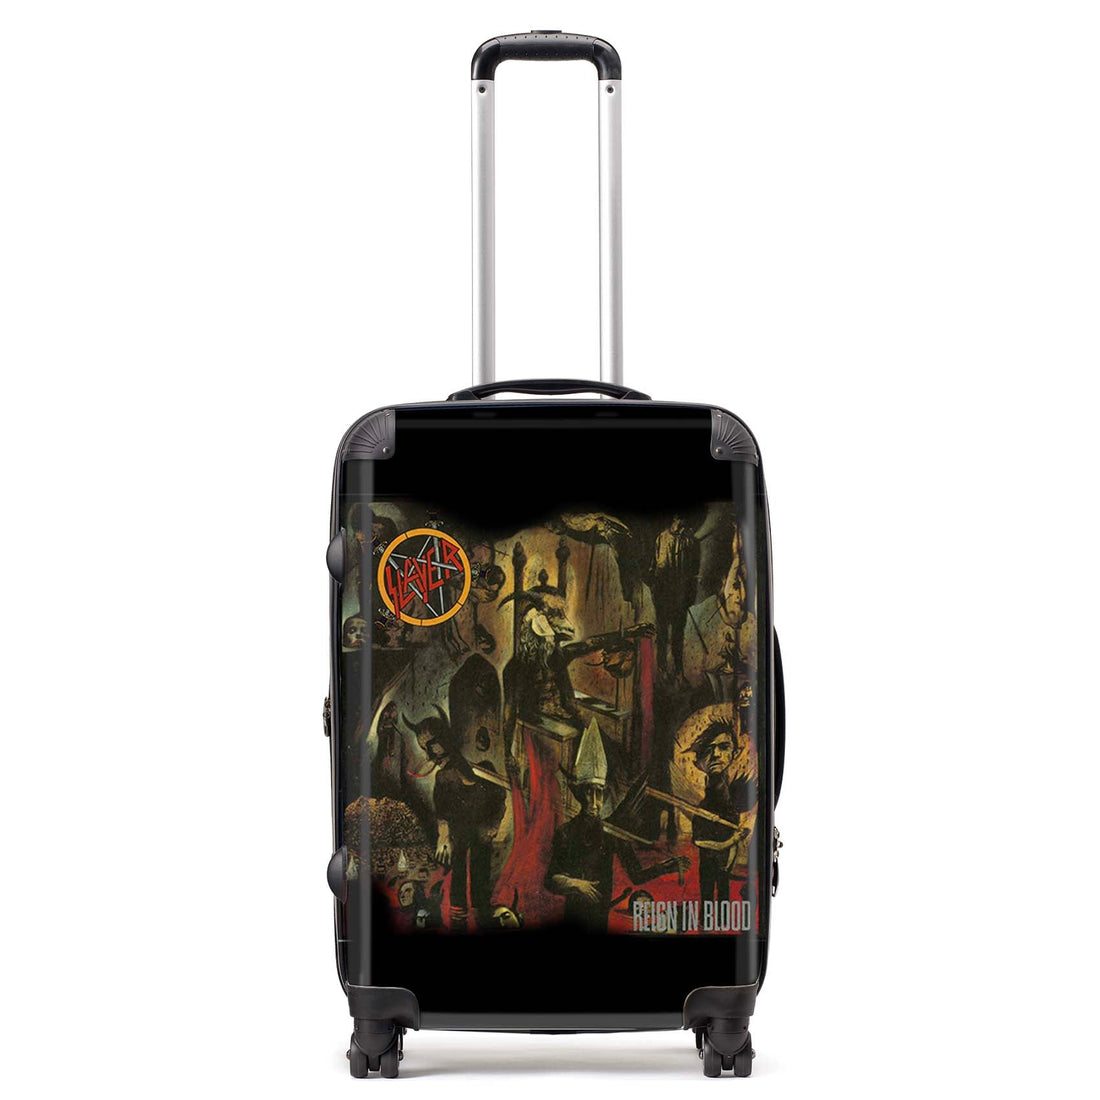 Rocksax Slayer Travel Bag Luggage - Reign in blood